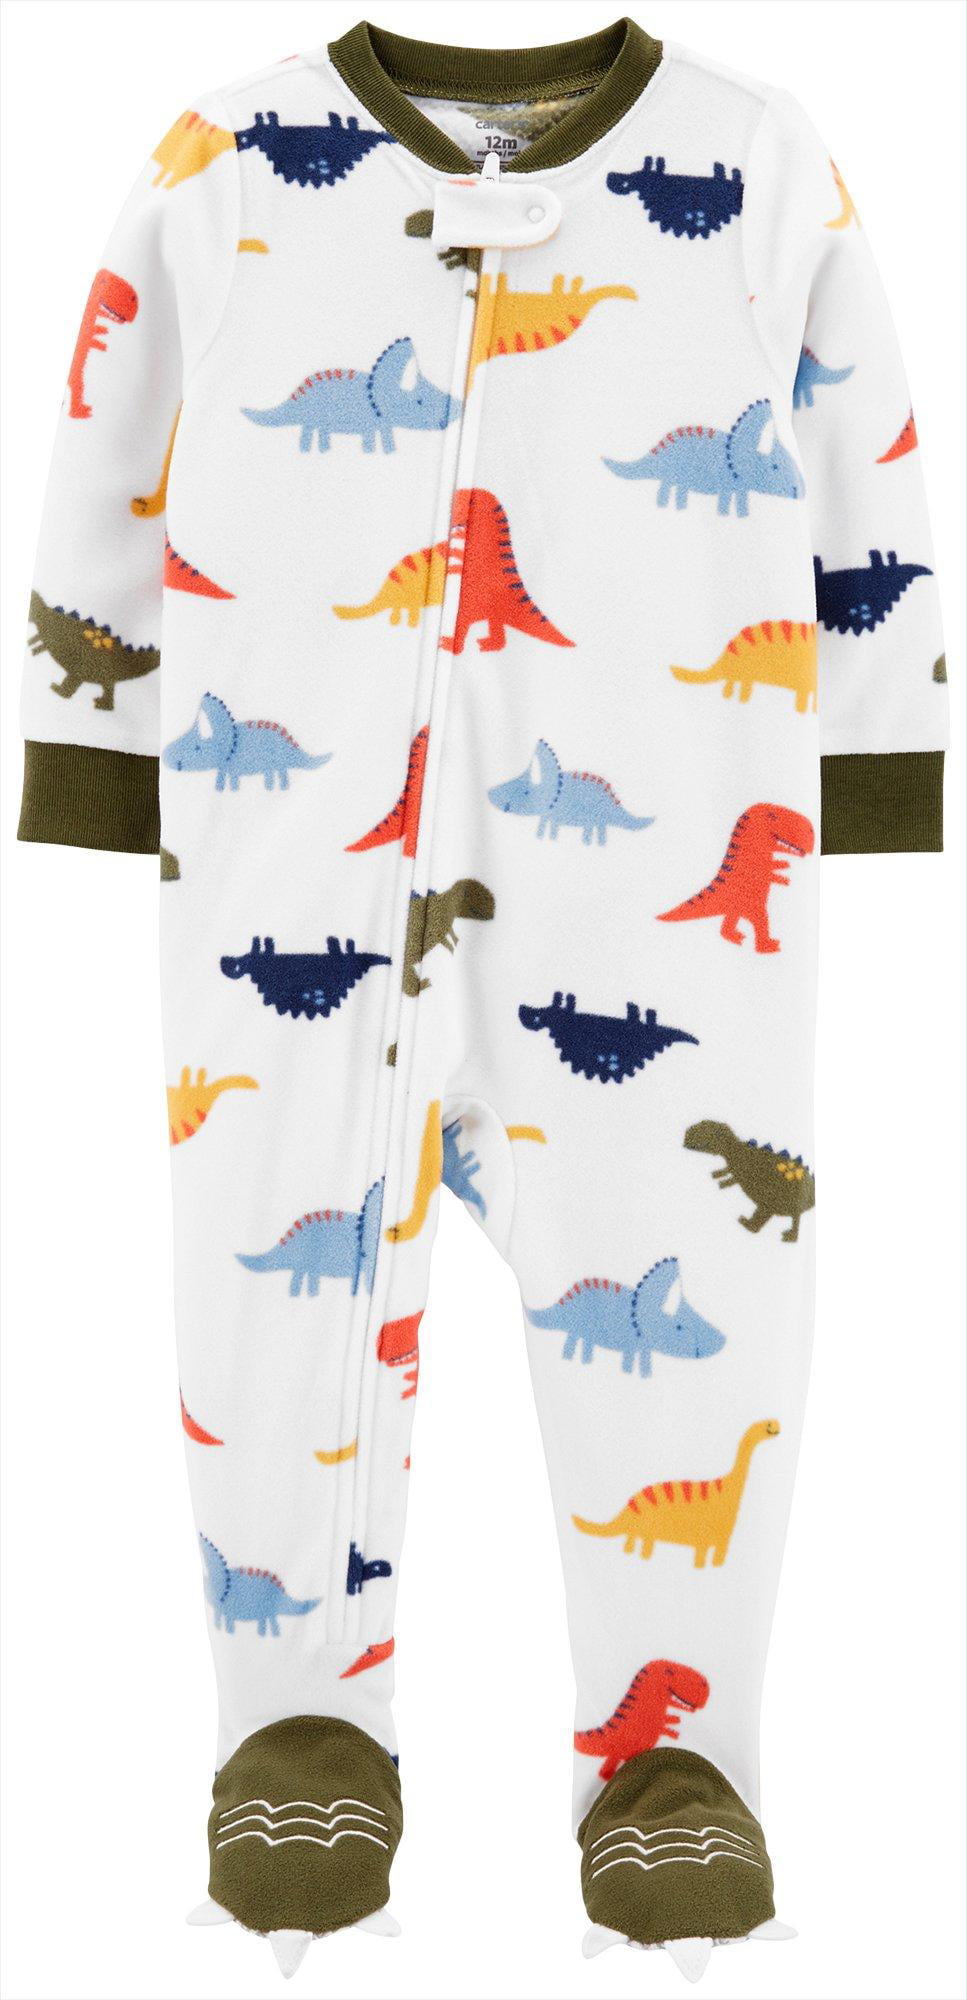 Carters Toddler Boys Dinosaur Feet Snug Fit Footie Pajamas 4T White/green  multi - Walmart.com